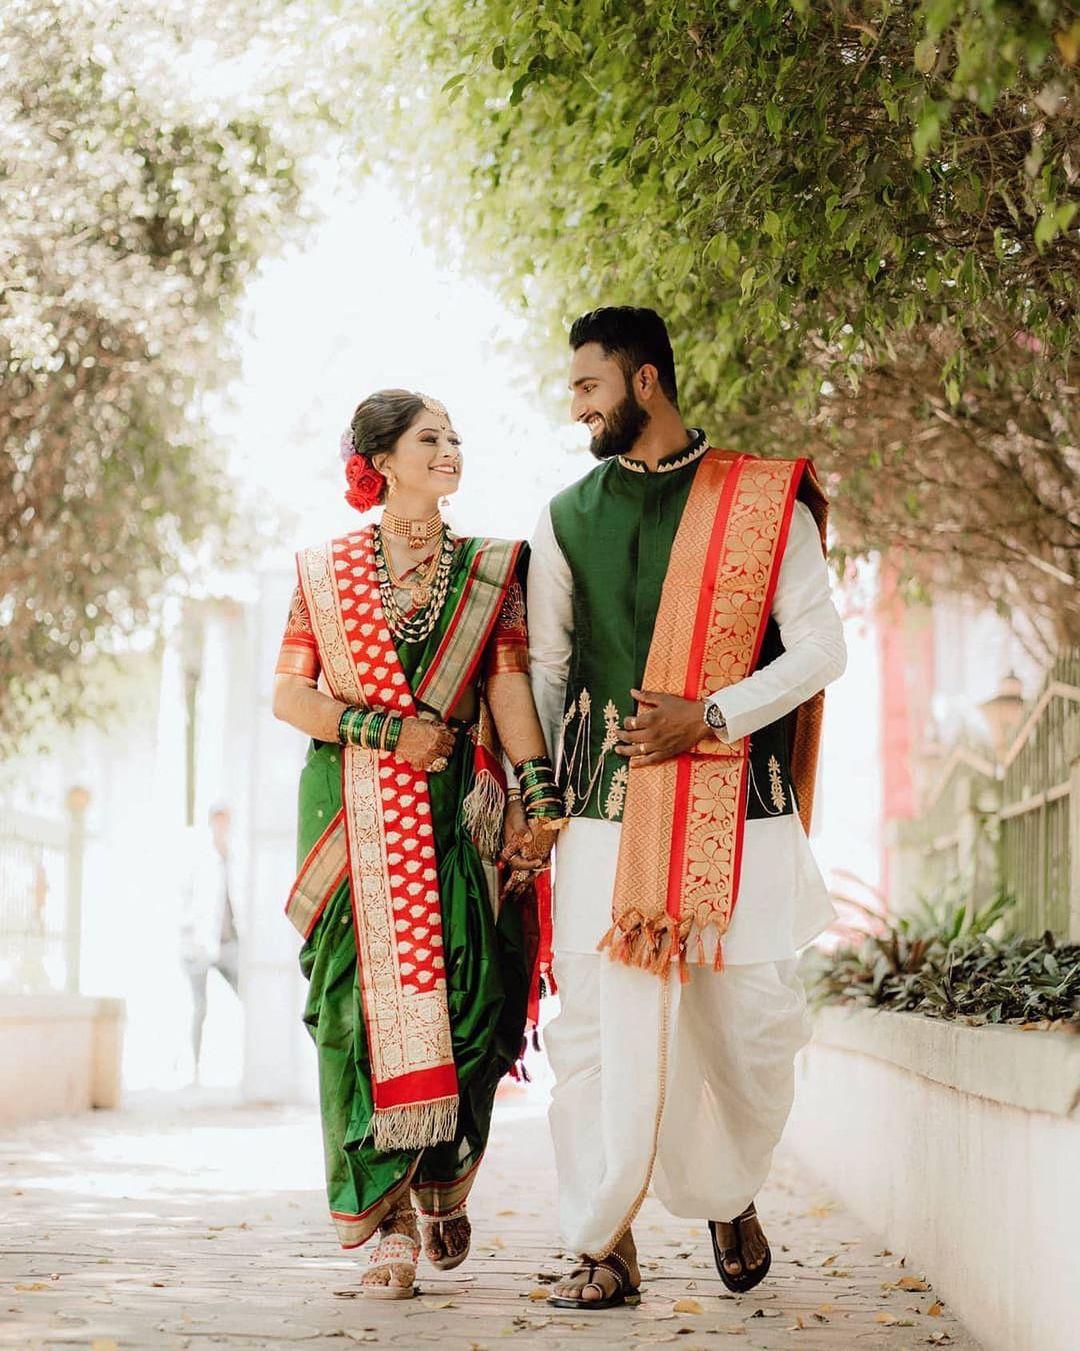 Engagement Anniversary Wishes : नवऱ्याला द्या साखरपुड्याच्या खास शुभेच्छा |  Engagement Anniversary Wishes to Husband in Marathi